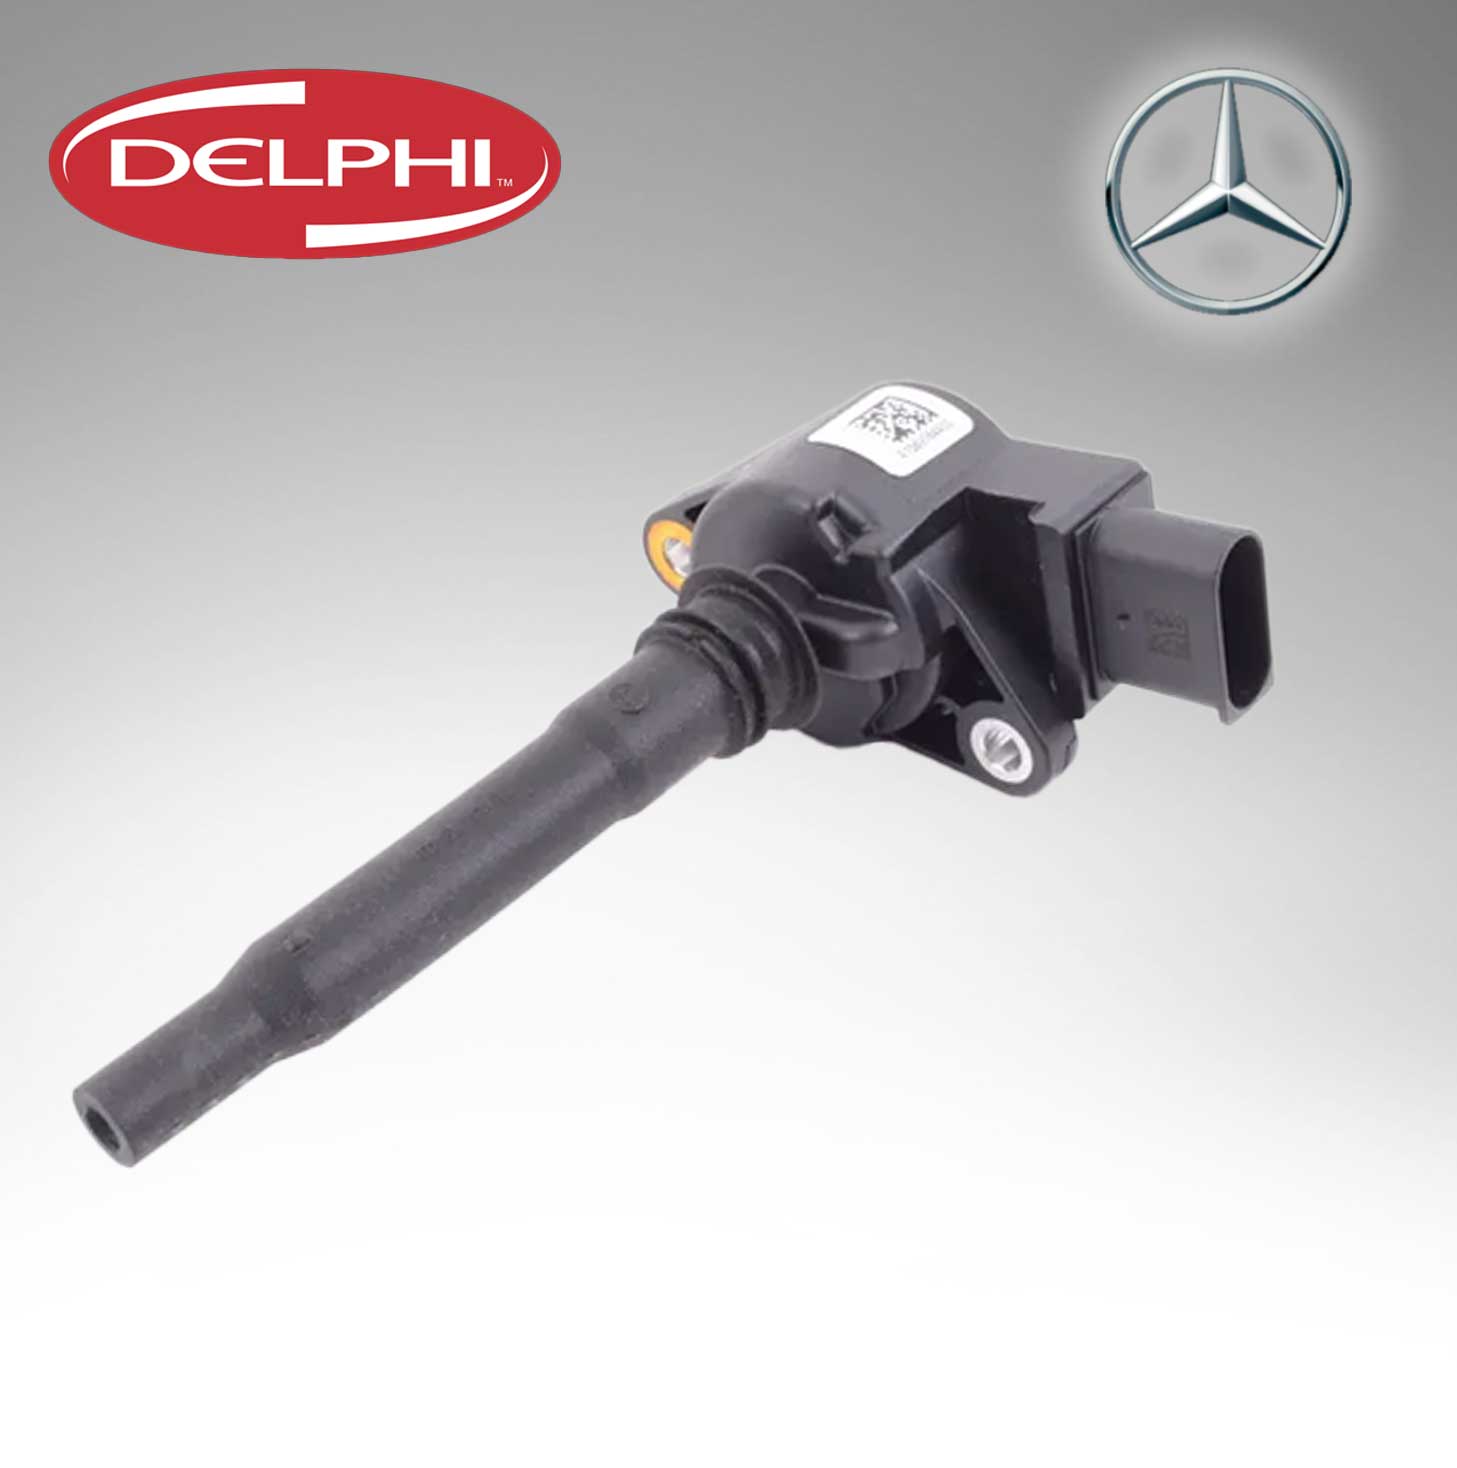 Delphi IGNITION COIL (GN10232-12B1) FOR Mercedes Benz 1569064400